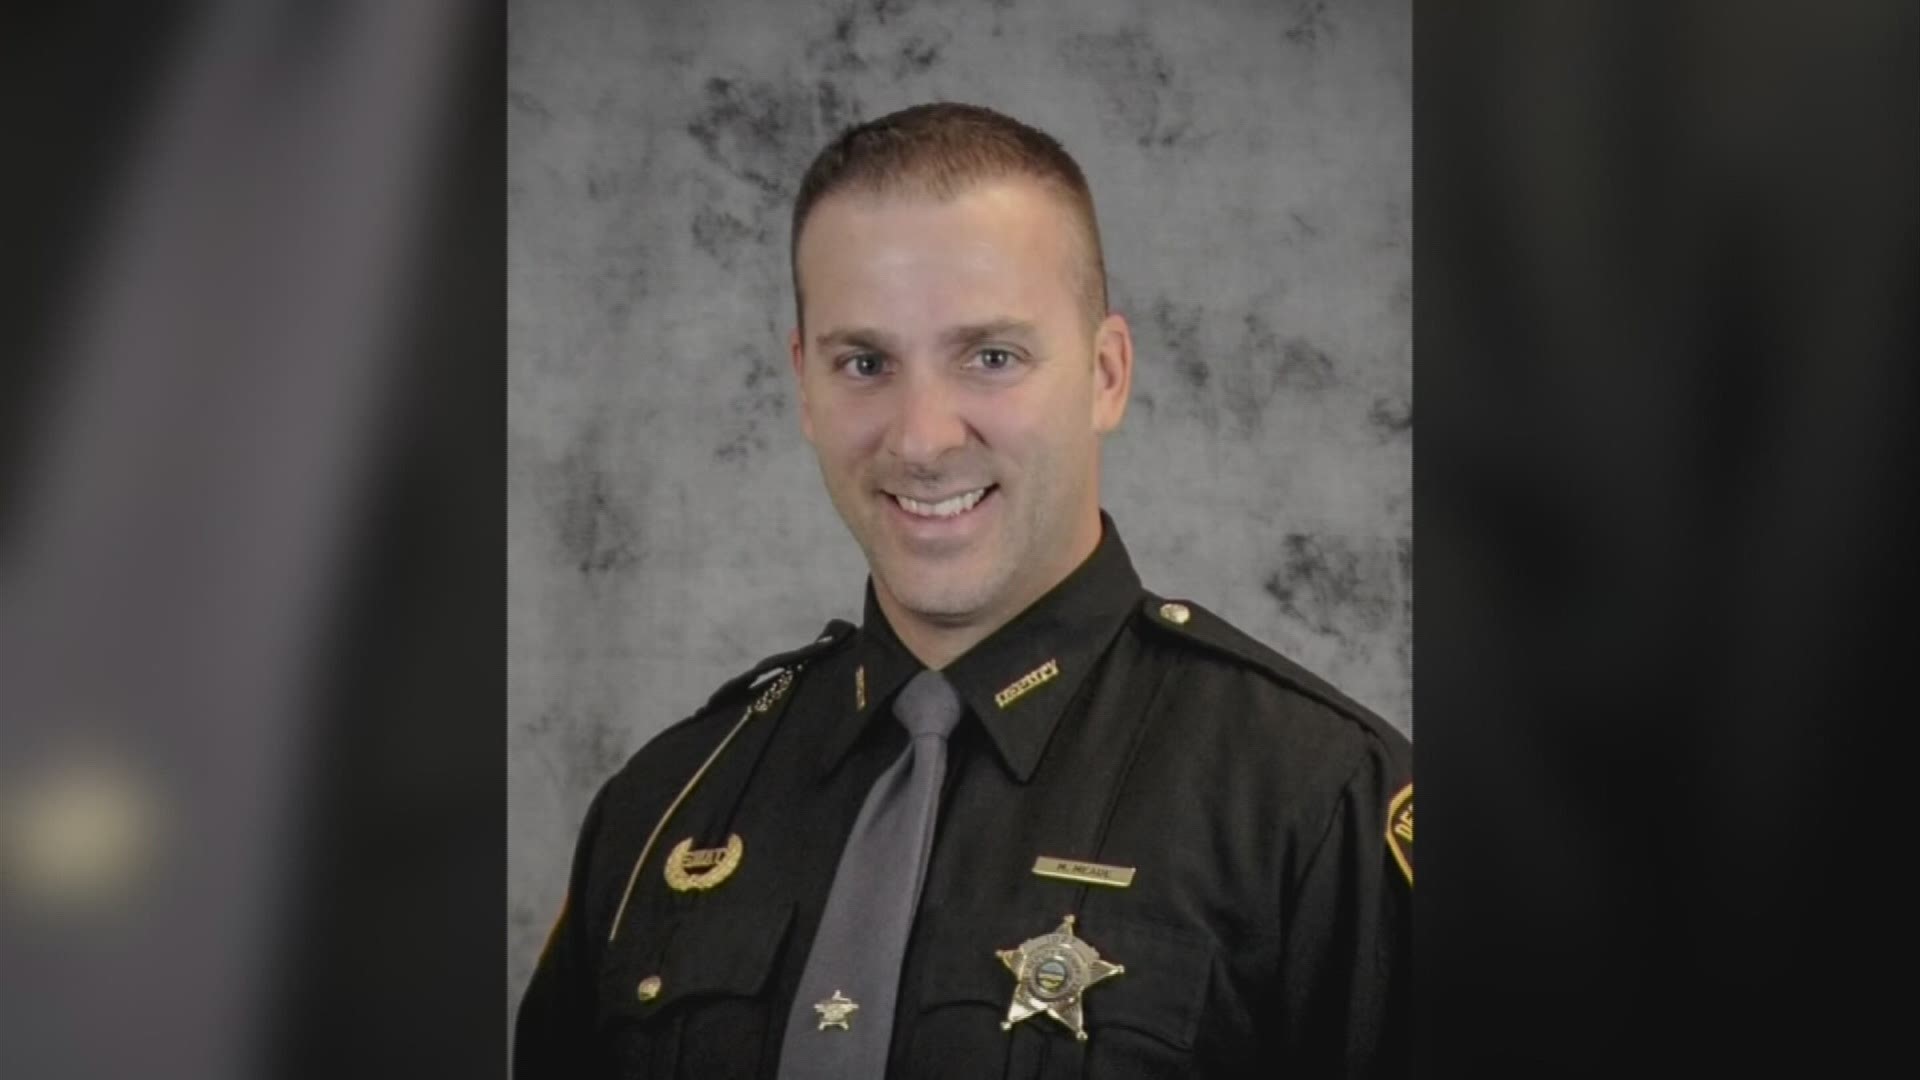 Franklin County Sheriff's Deputy Jason Meade fatally shot Casey Goodson Jr. on Dec. 4.